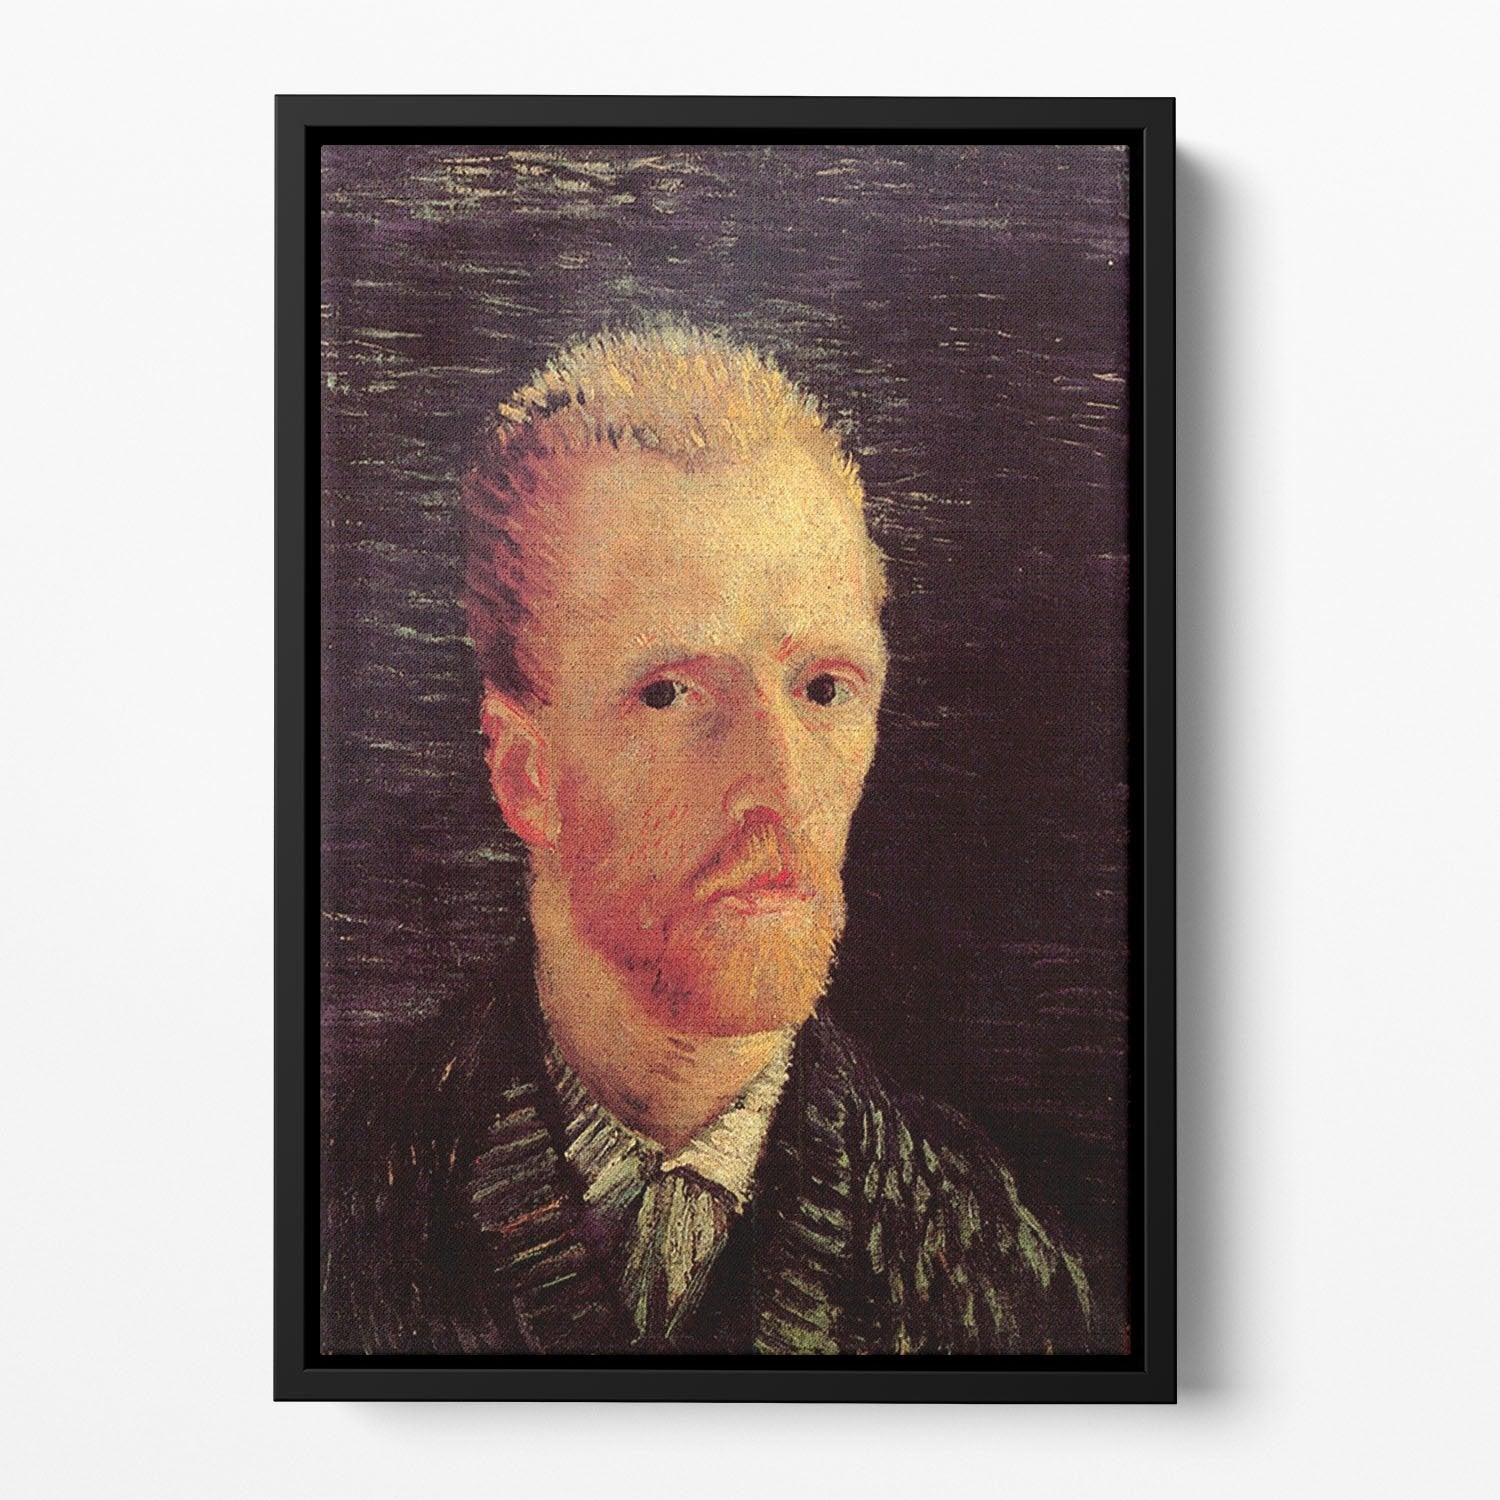 Self-Portrait 6 by Van Gogh Floating Framed Canvas